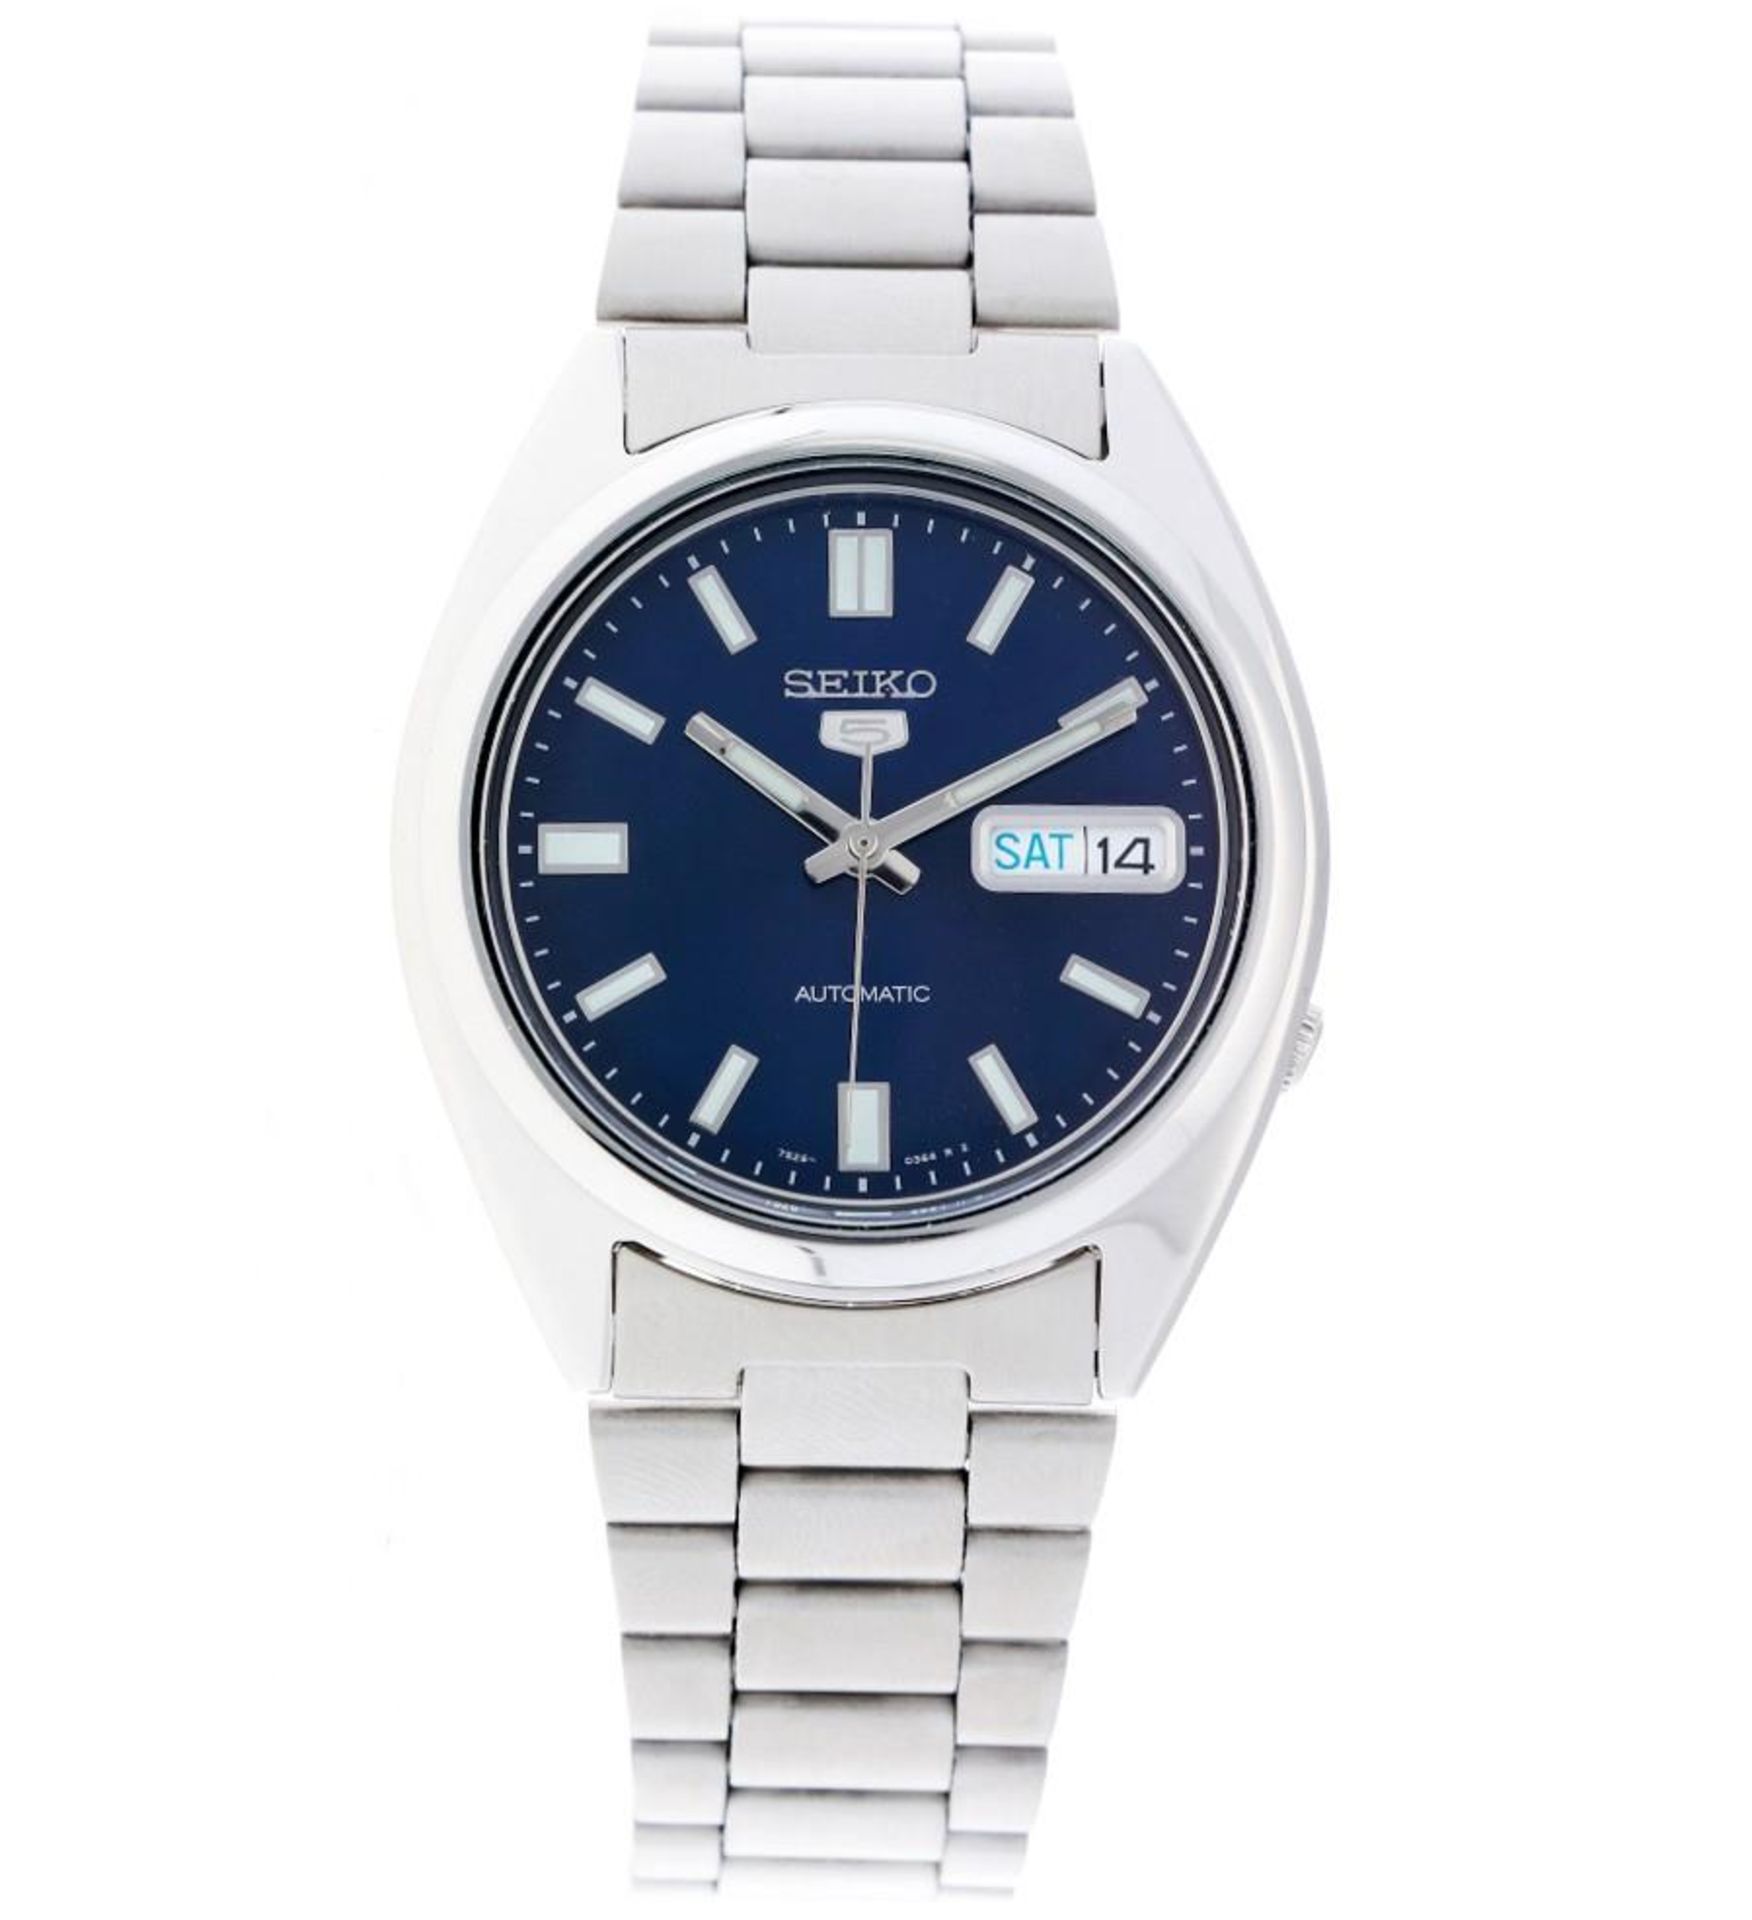 Seiko Day Date - unworn - 7S26-0480 - Men's watch - approx. 2015.